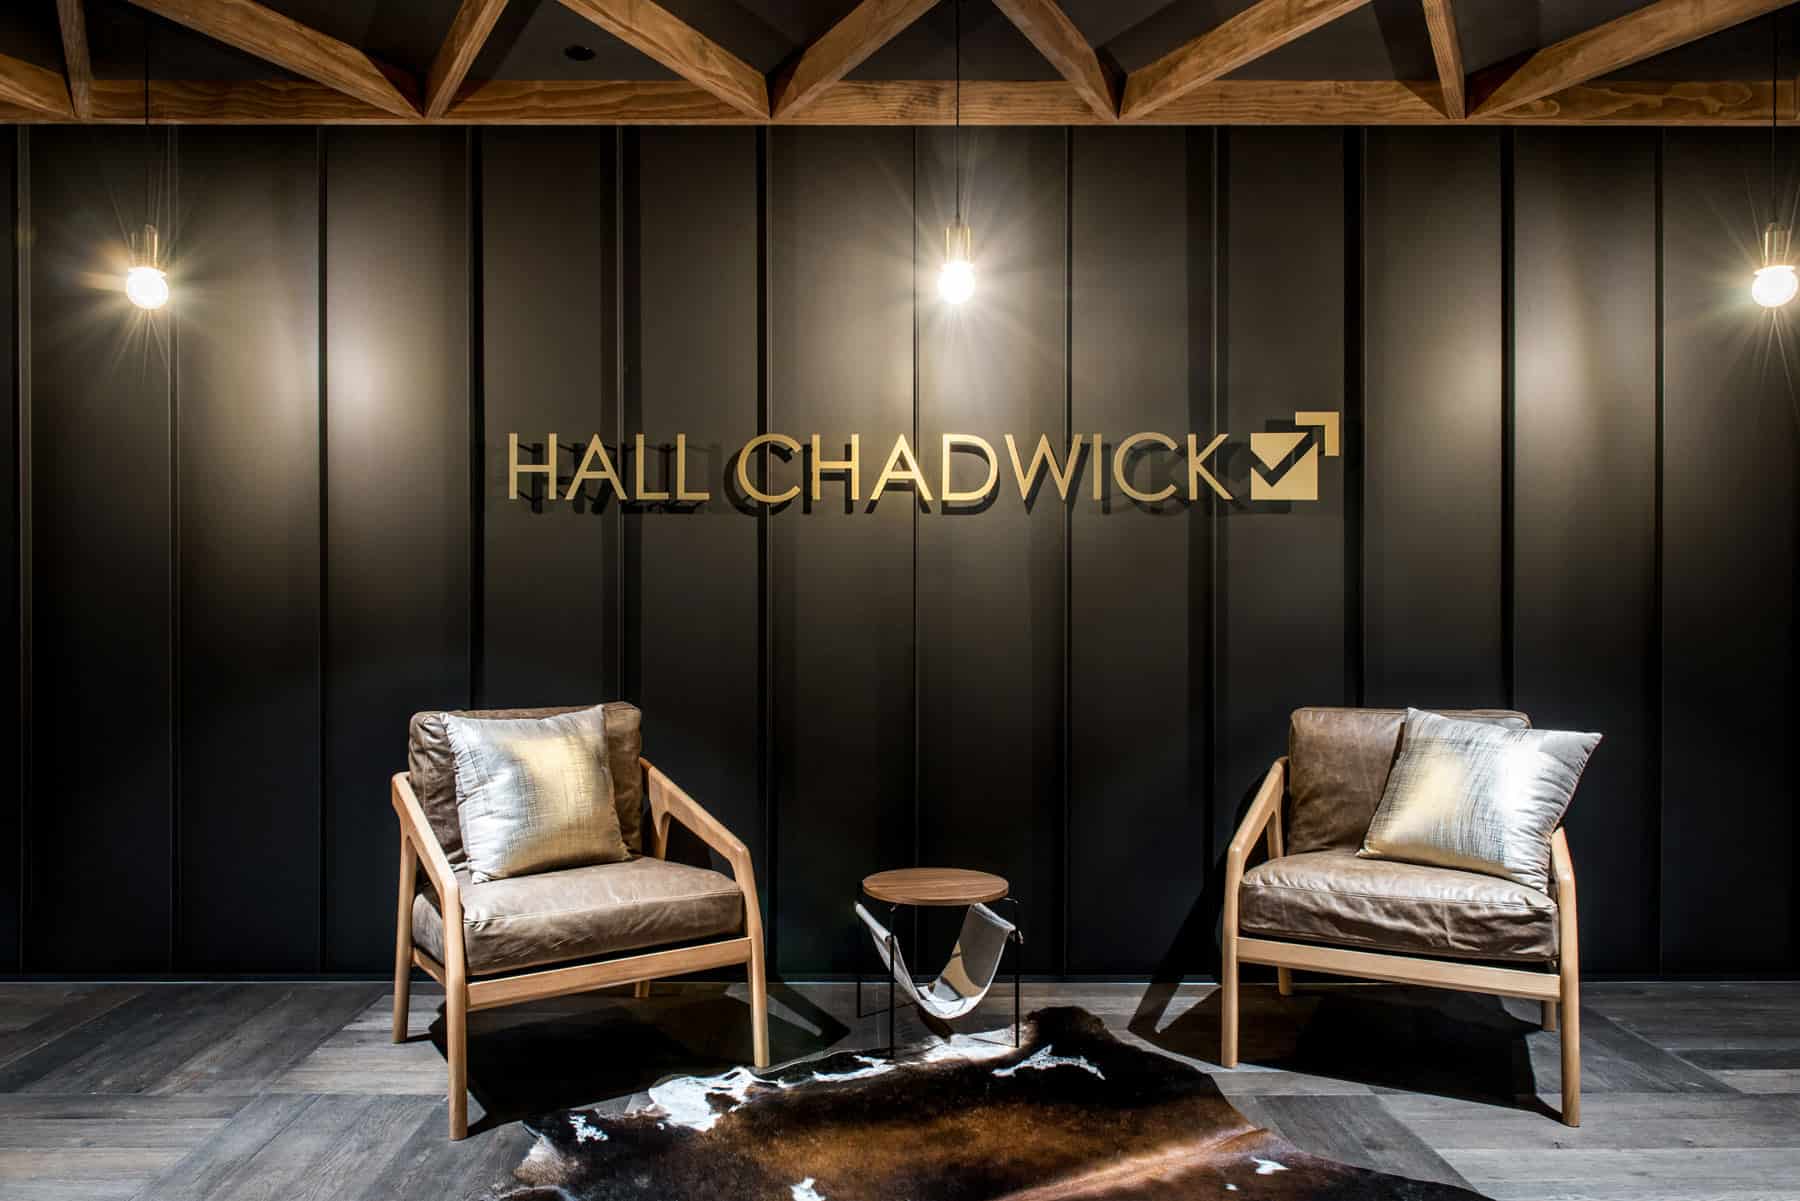 Hall Chadwick